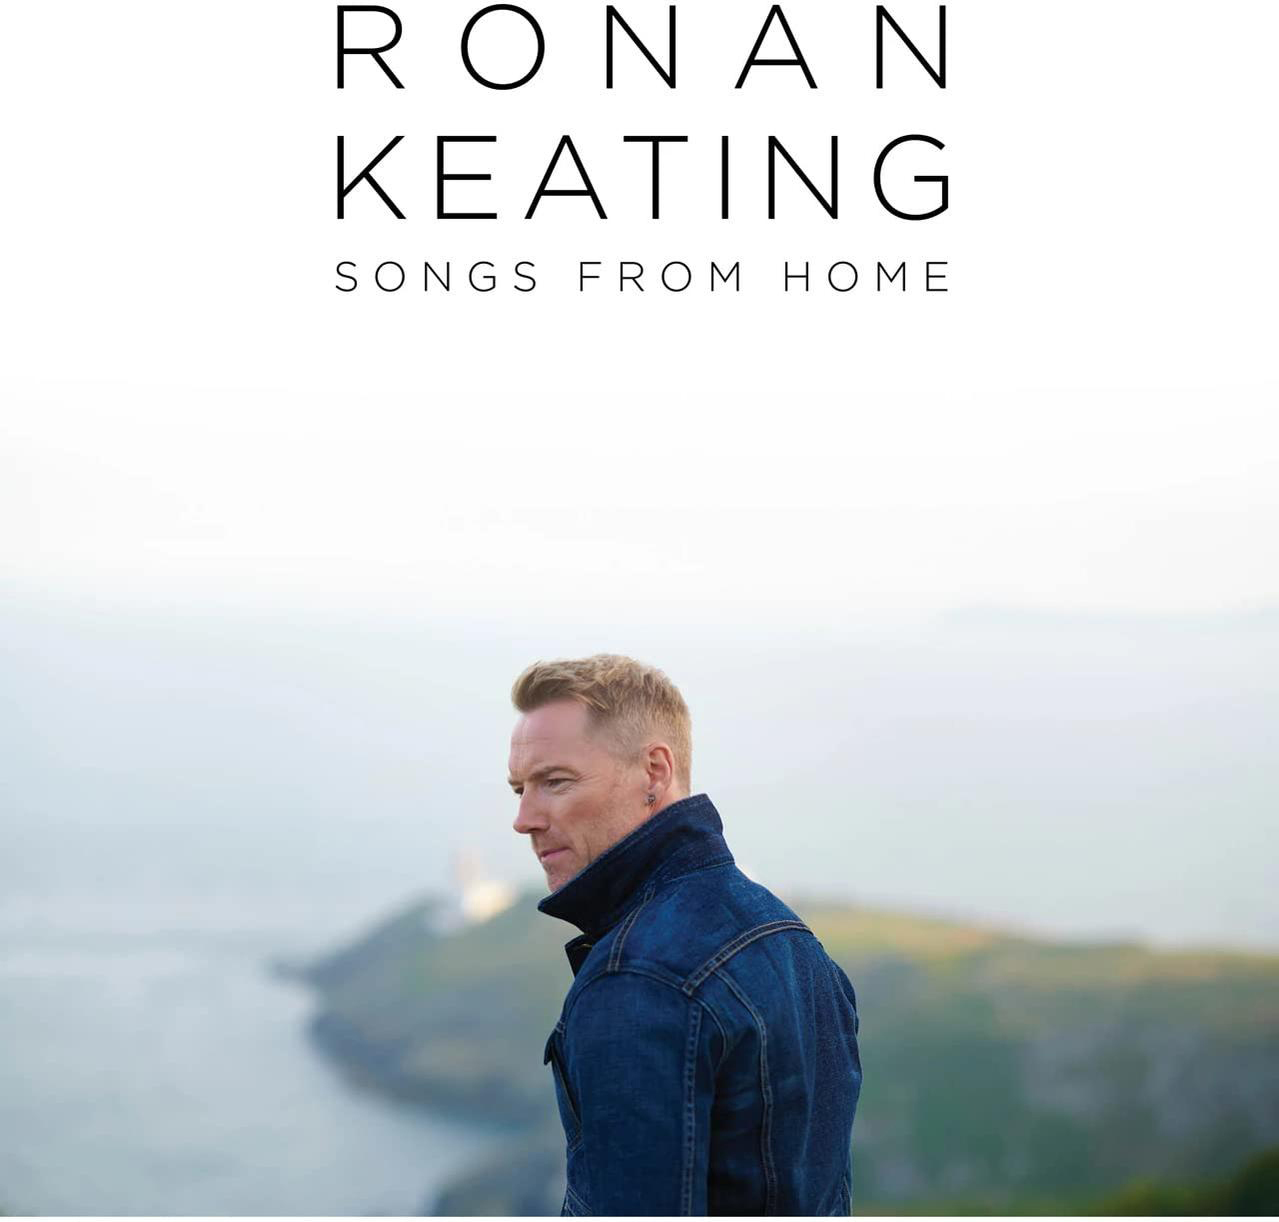 From Songs Ronan - Home - Keating (CD)